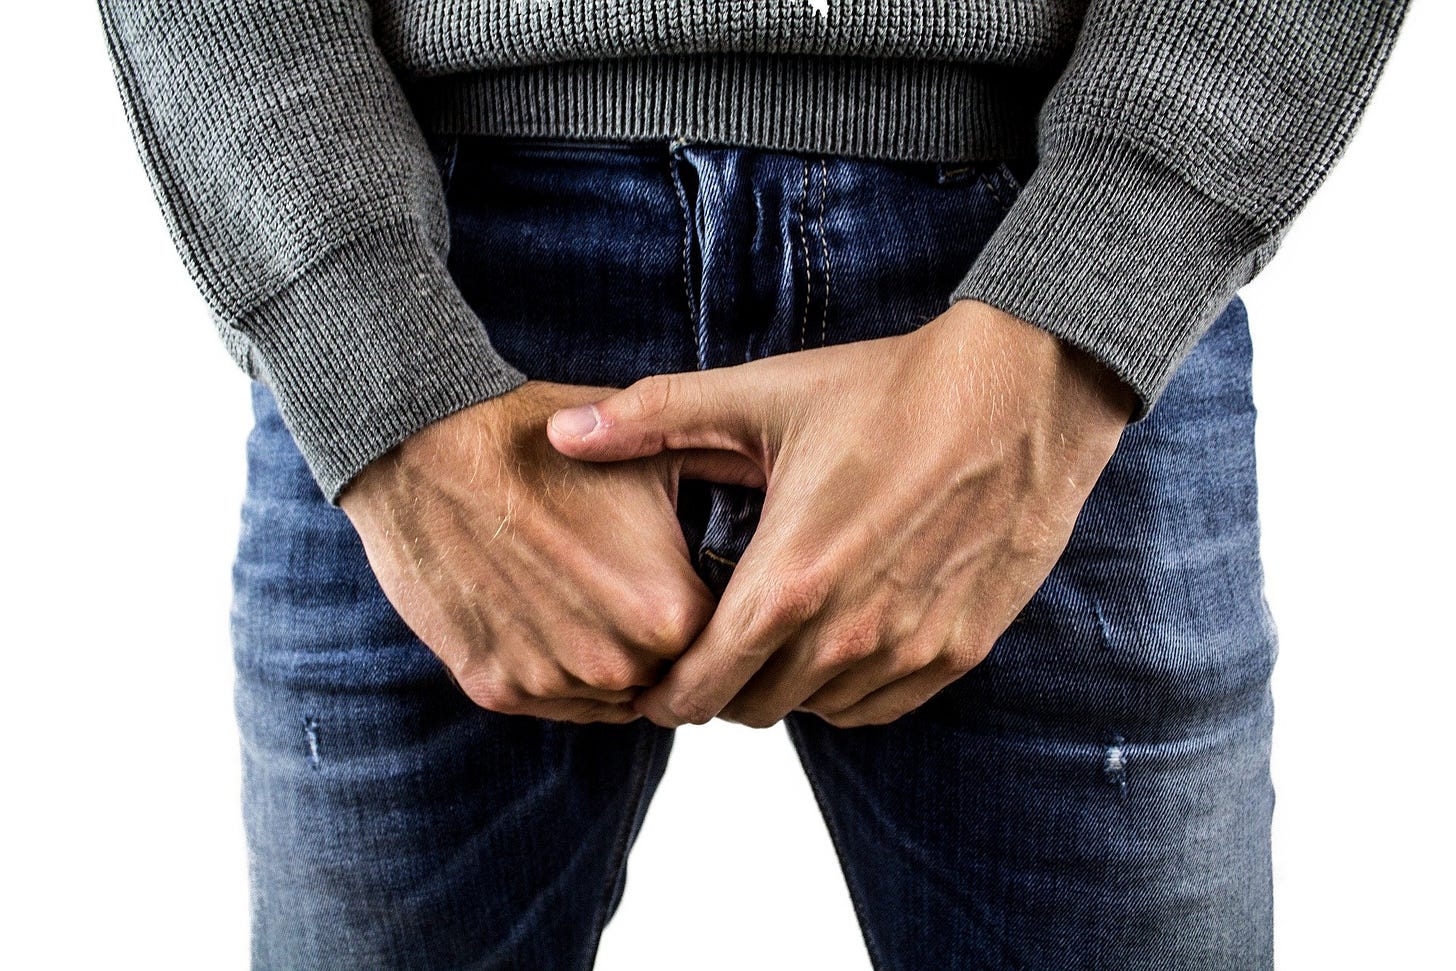 A man grabbing his crotch.